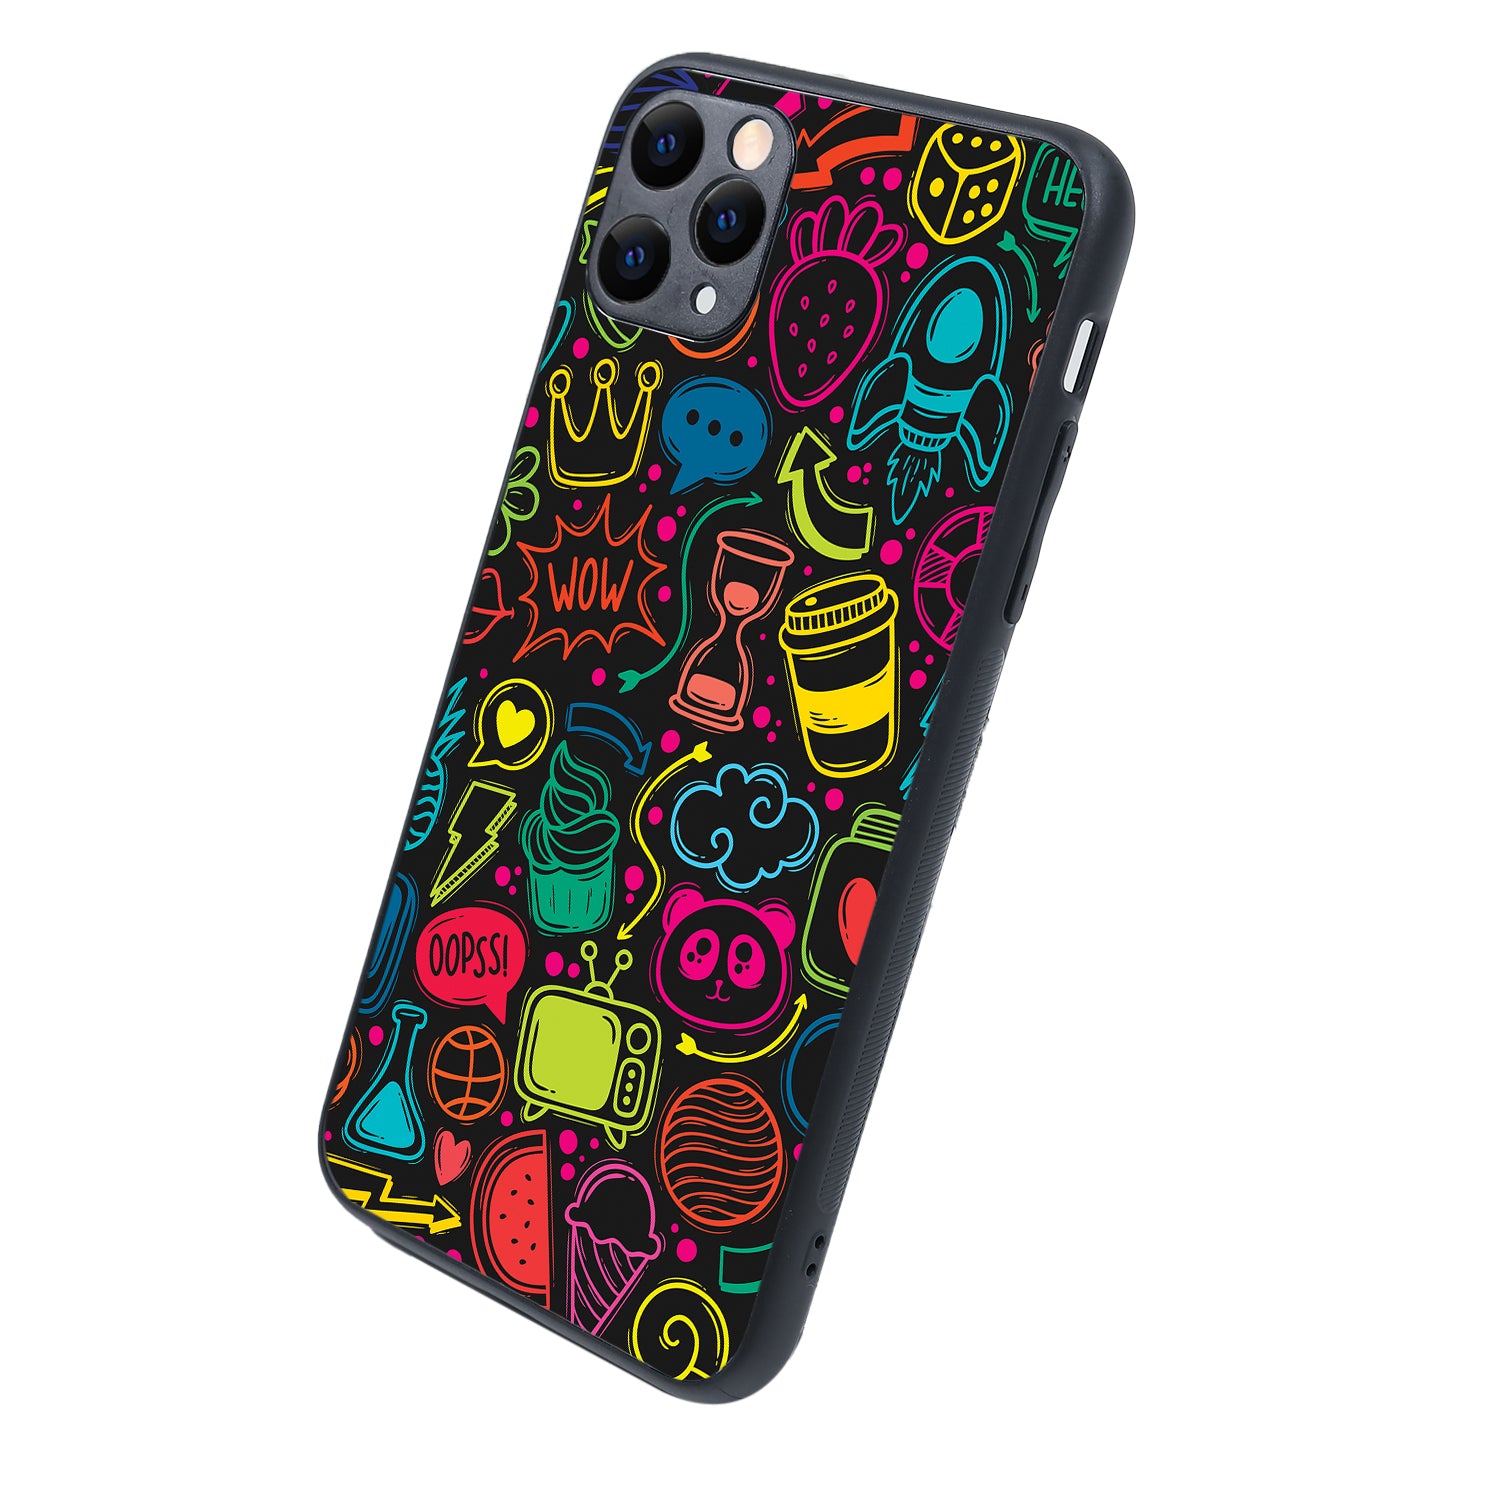 Wow Black Doodle iPhone 11 Pro Max Case